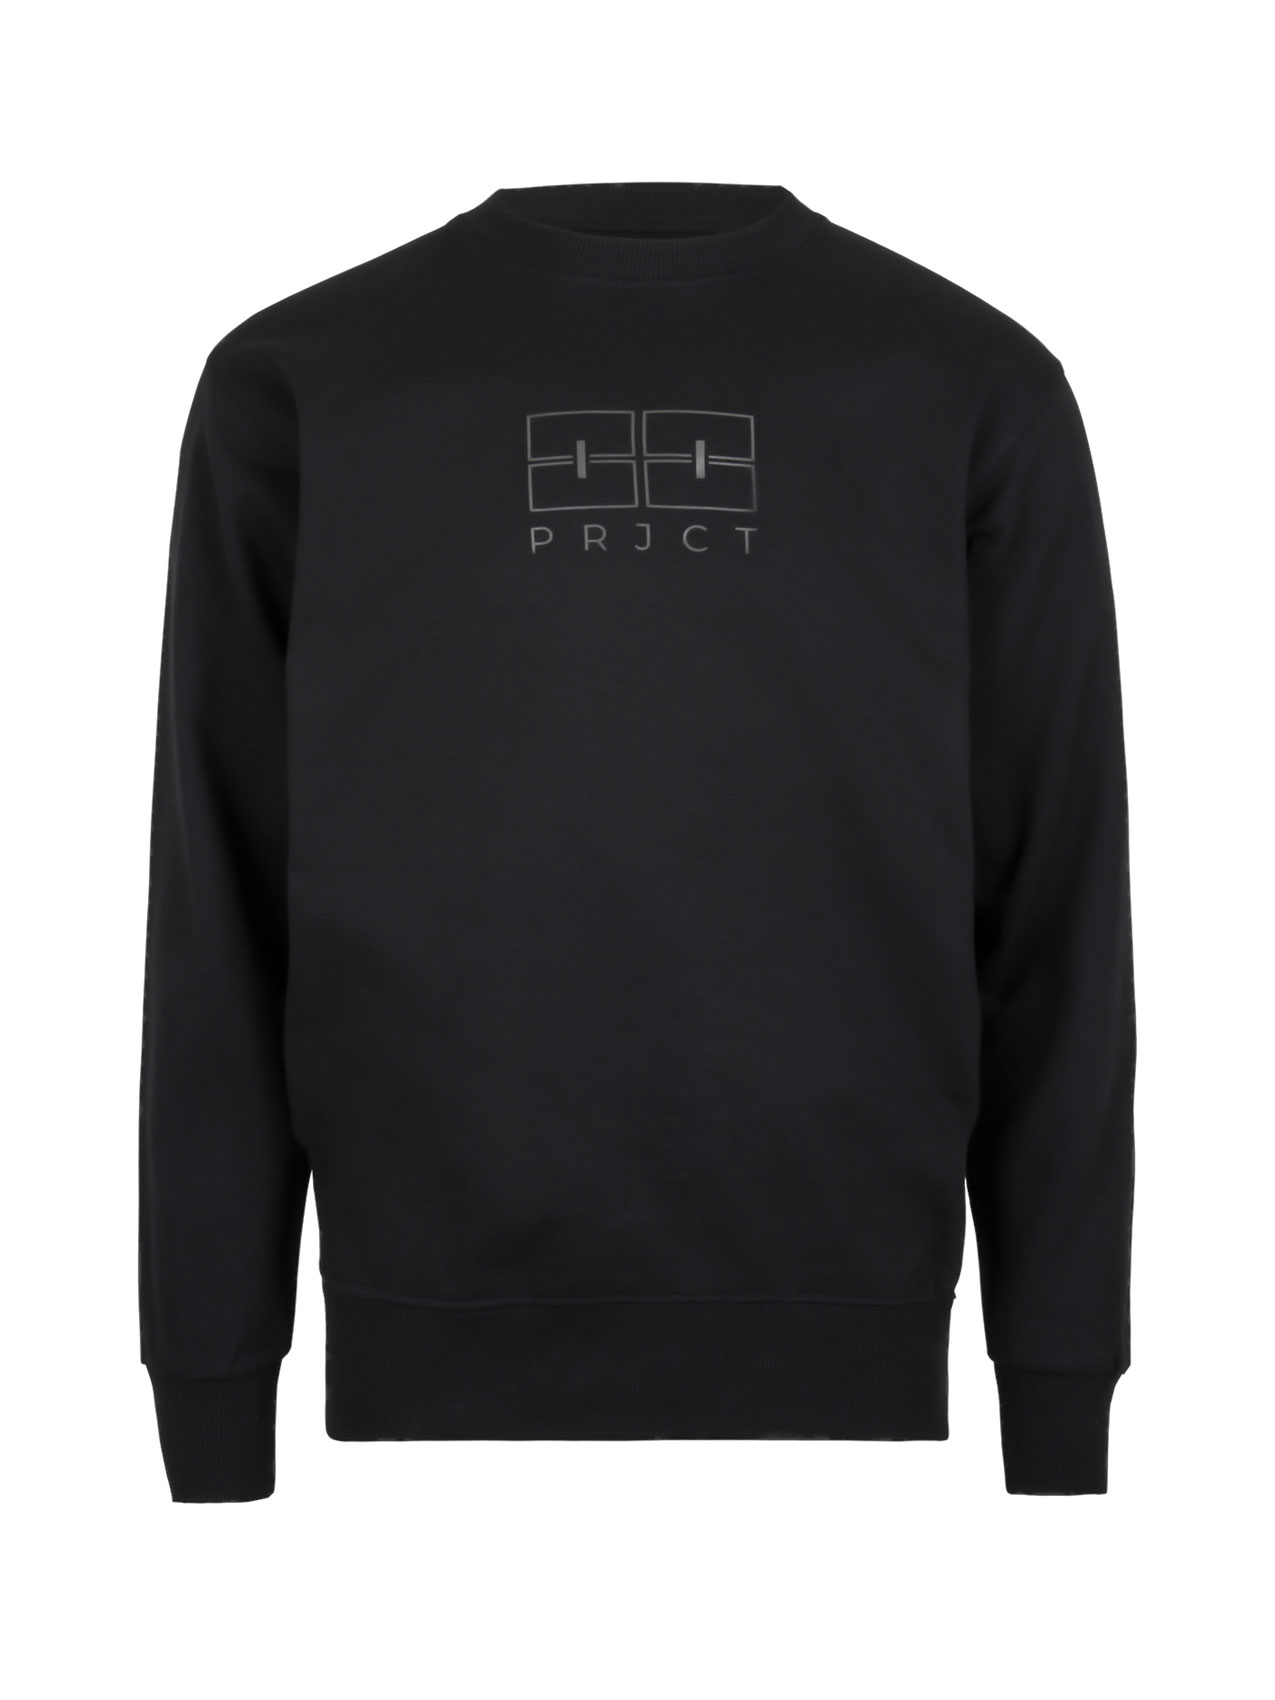 ?LOGO COLLECTION? Sweatshirt front reflective logo ? Black